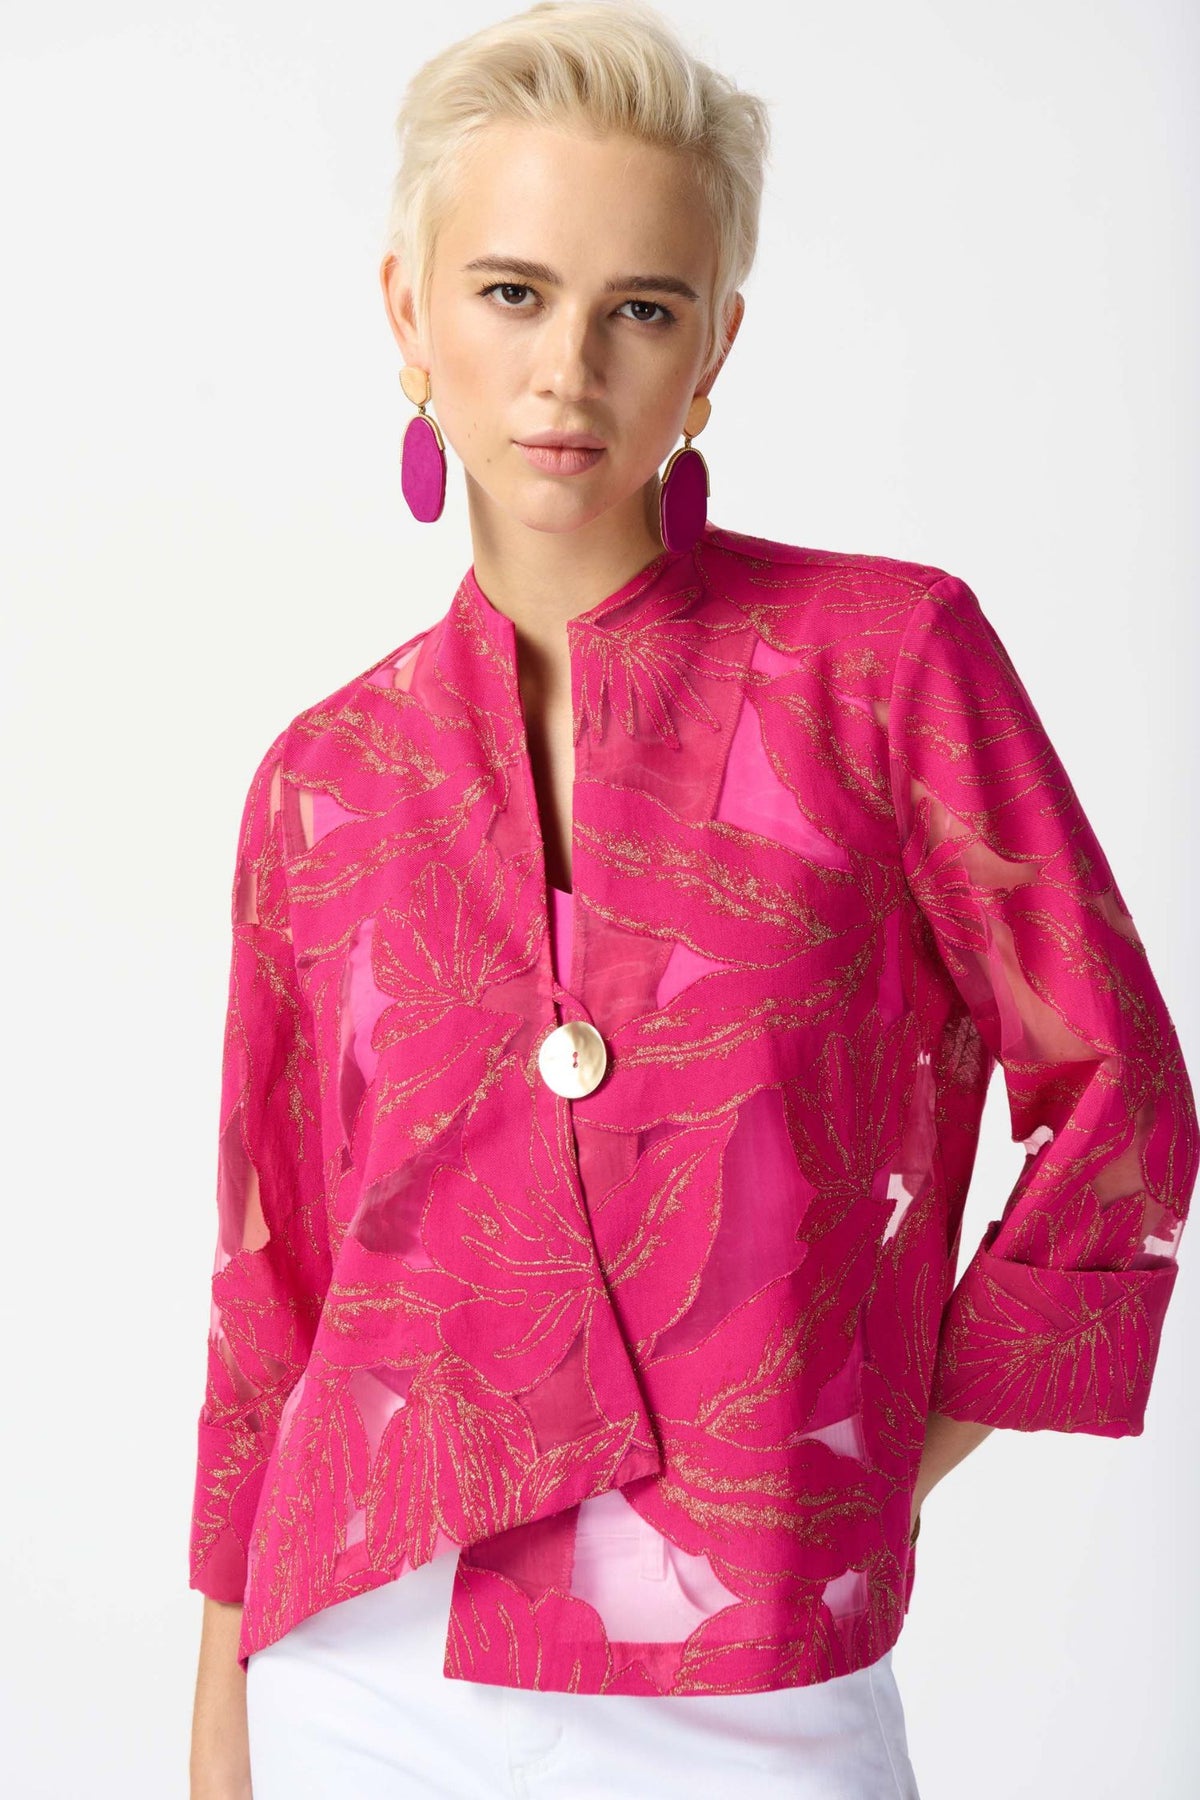 Joseph Ribkoff Jacquard Tropical Print Swing Jacket - Style 242219, front, pink